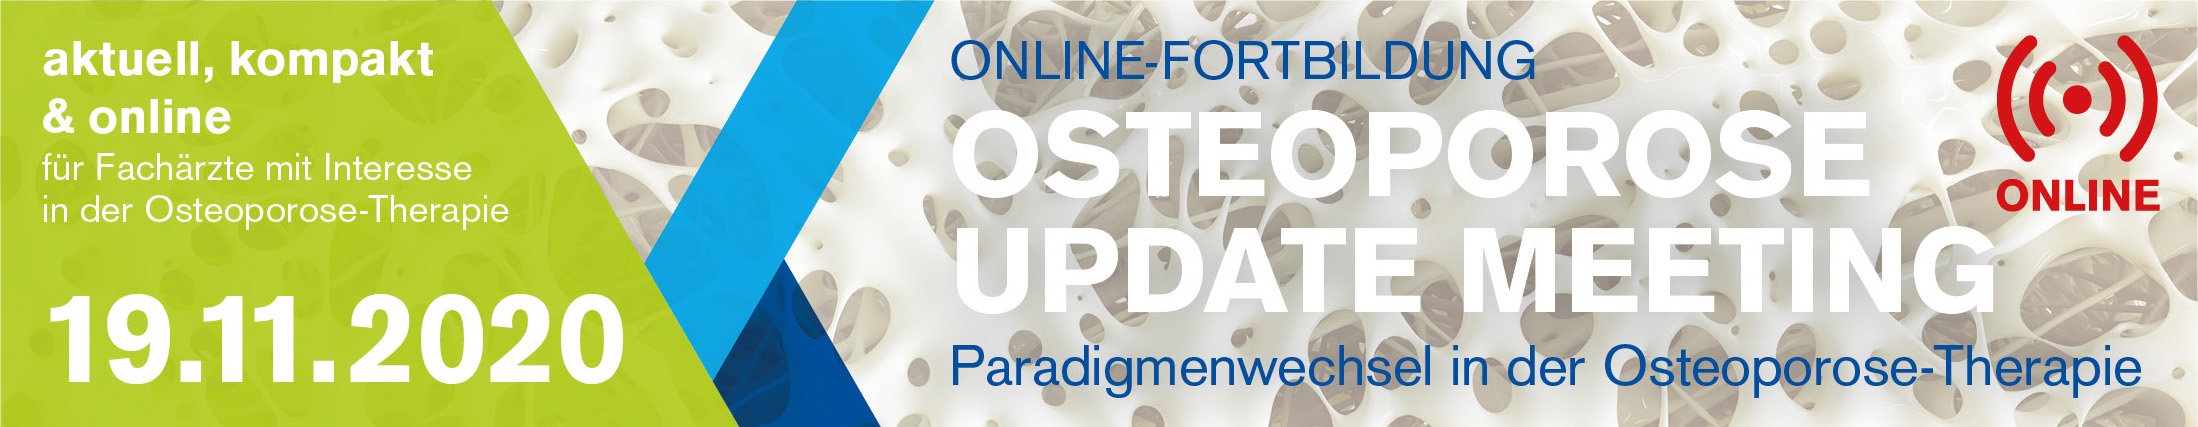 Fortbildung Osteoporose Update Meeting